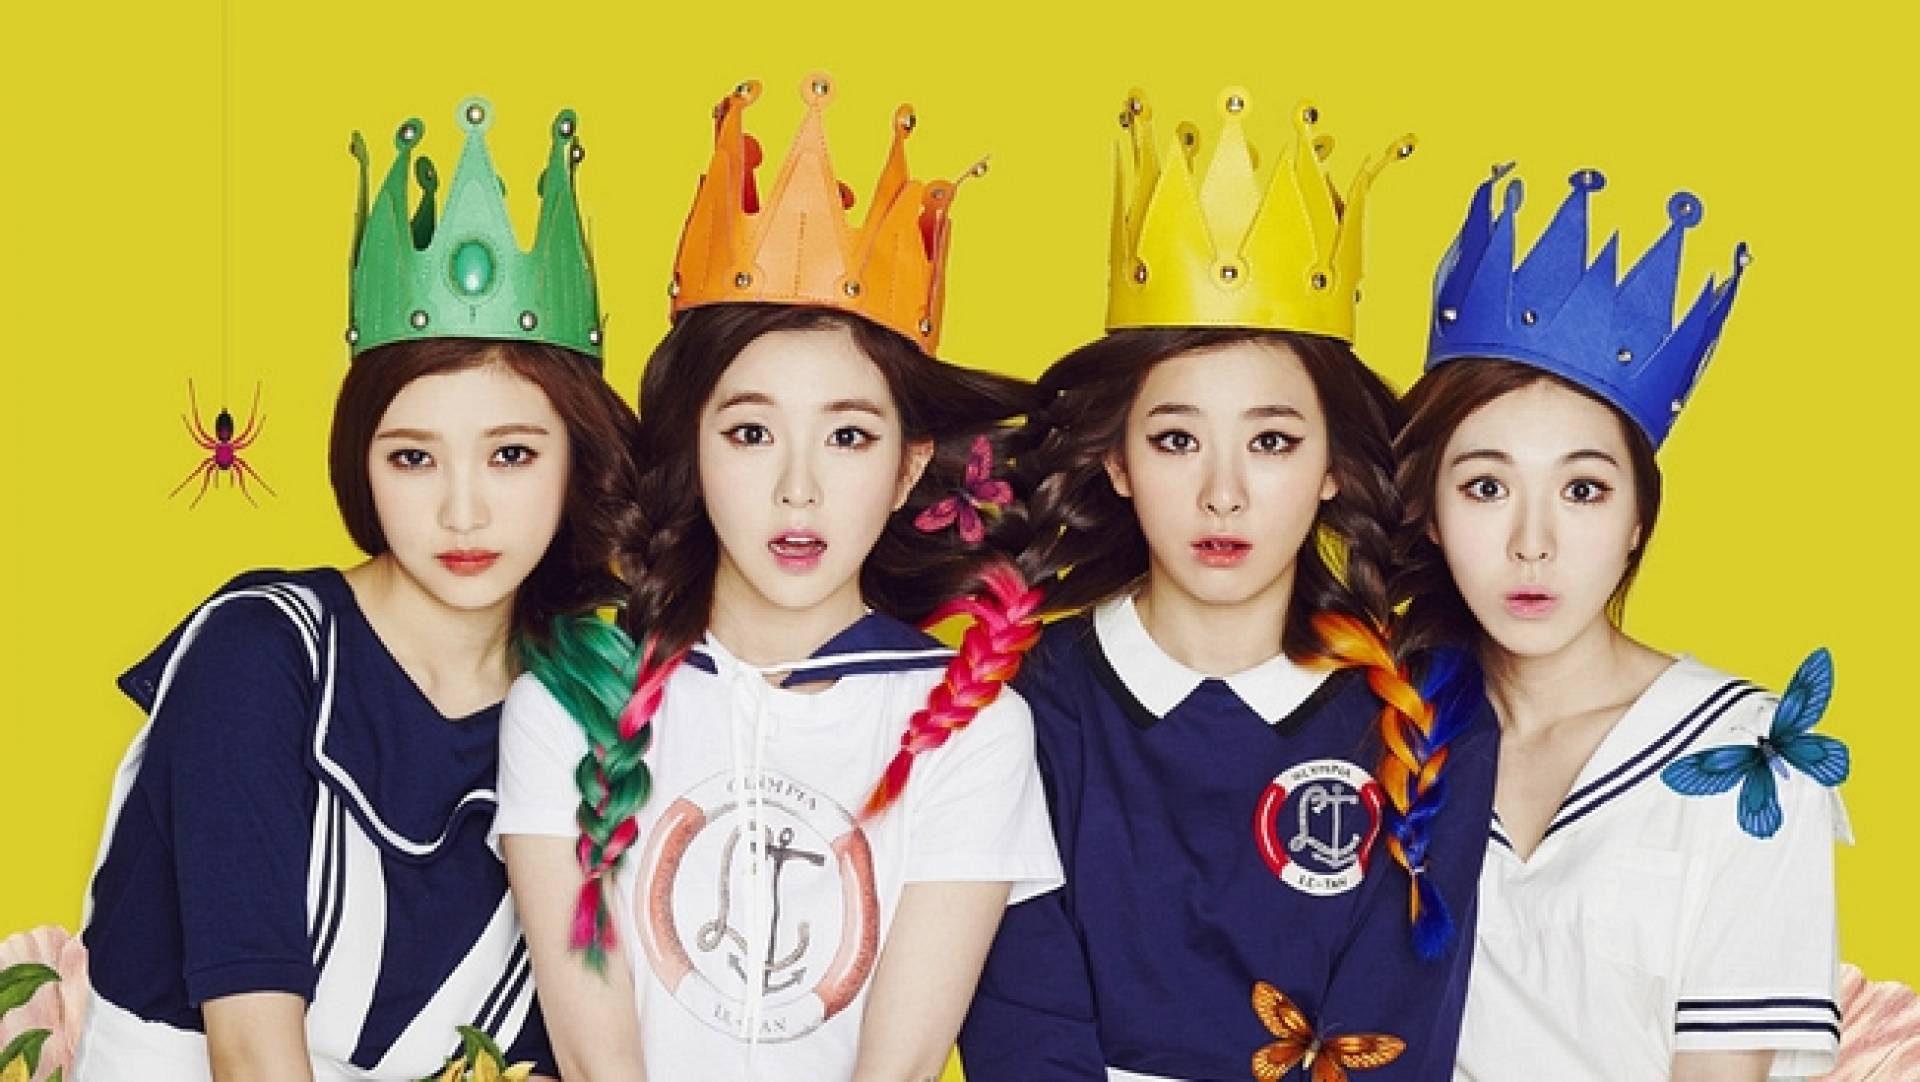 Up kpop. Группа Red Velvet. Ред вельвет хэппинес. Red Velvet знак корейской группы. Happiness (песня Red Velvet).